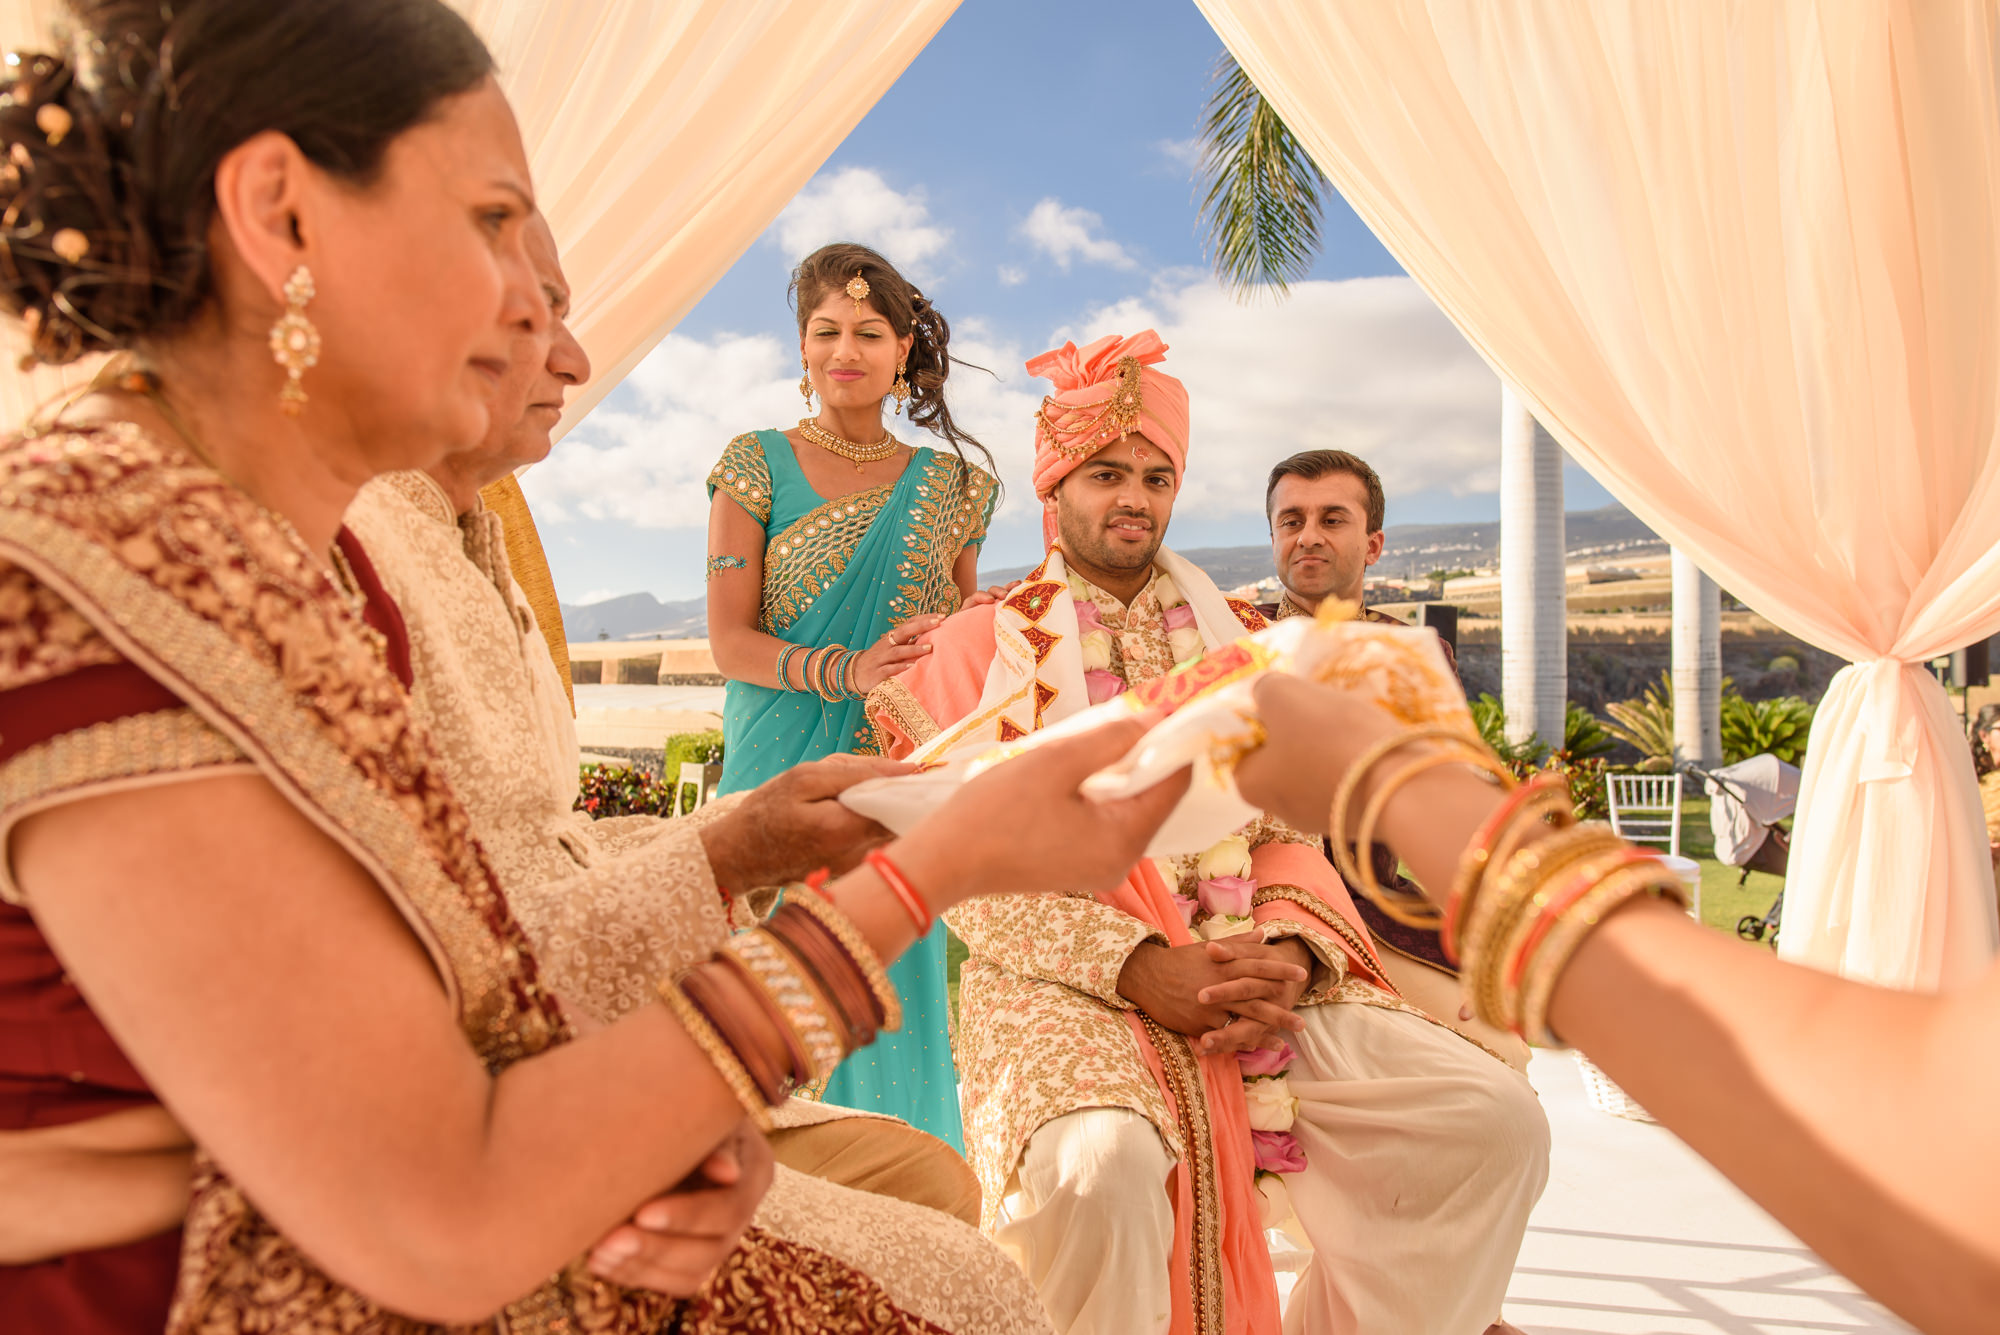 satnam photography wedding indian asian hindu destination wedding photographer tenerife ritz carlton abama-155.jpg